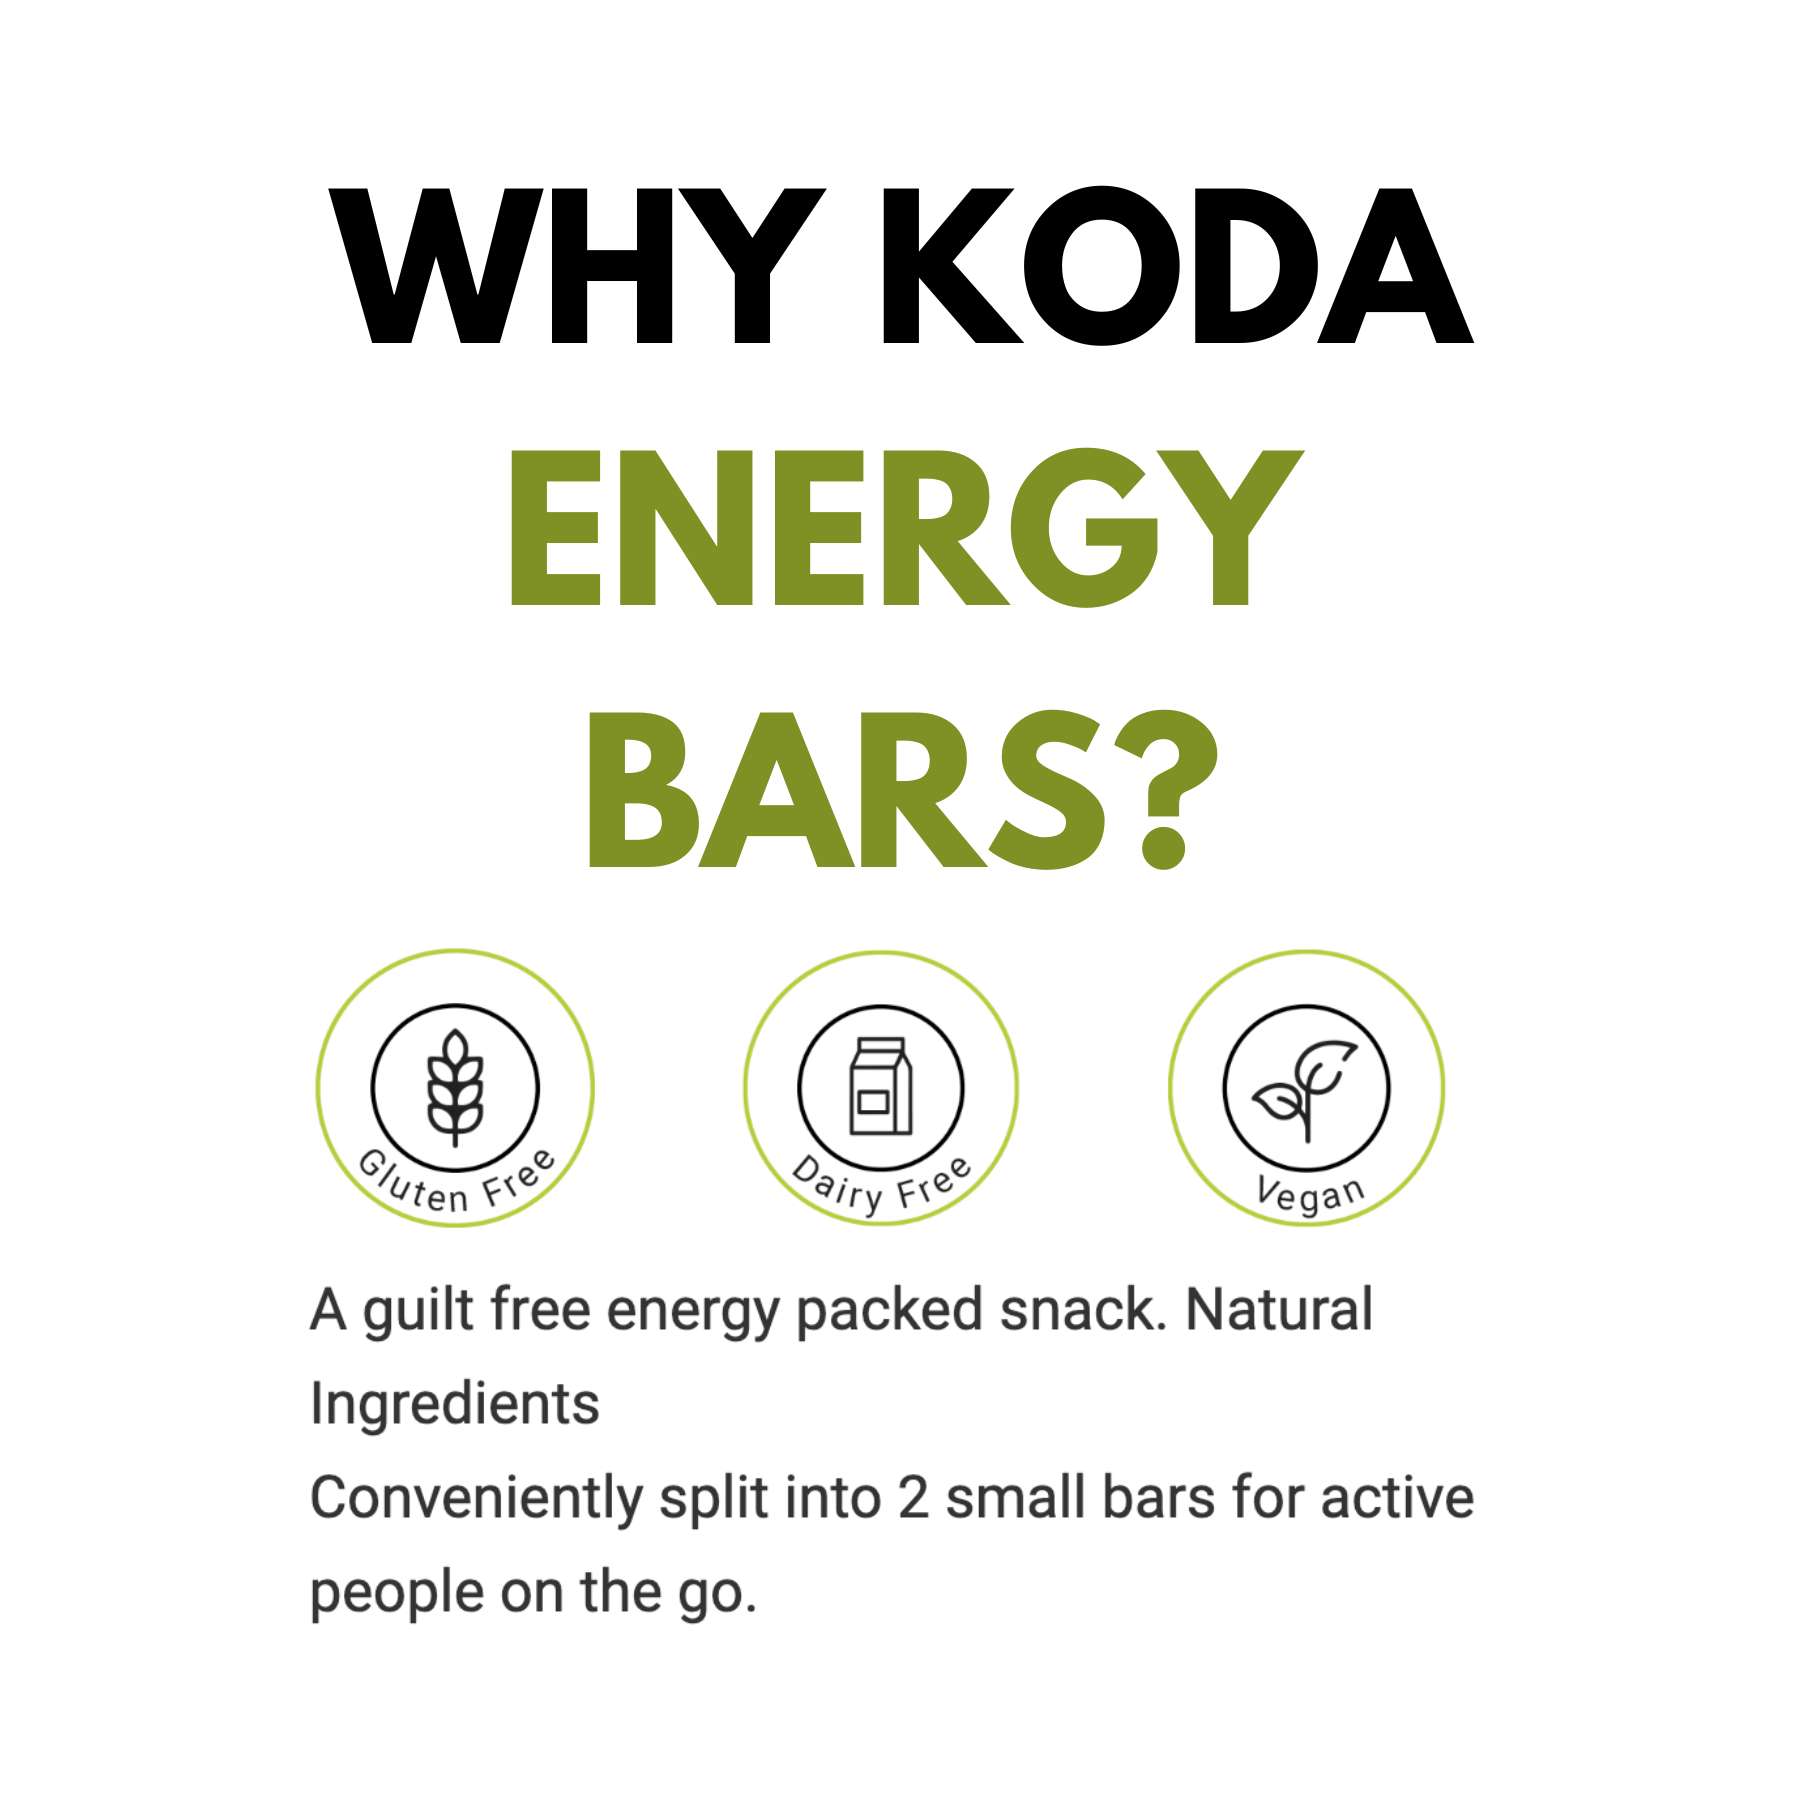 Koda Energy Bar Koda Energy Bar